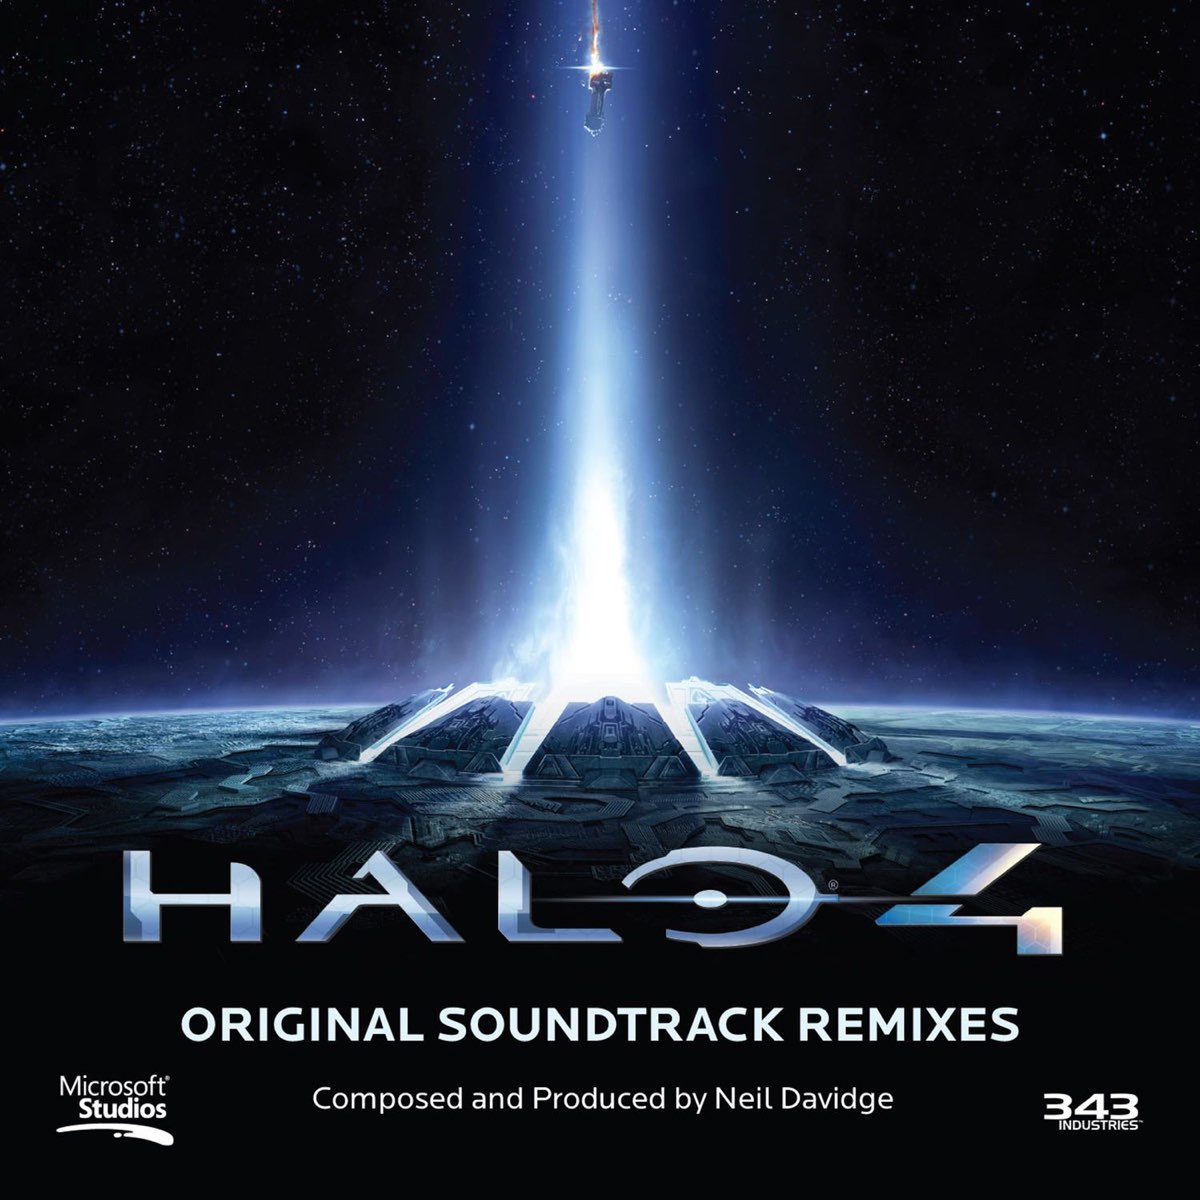 Soundtrack remix. Neil Davidge Halo 4 Original Soundtrack. Halo 4 - Original Soundtrack Remixes. The Harbor Soundtrack and Remixes.